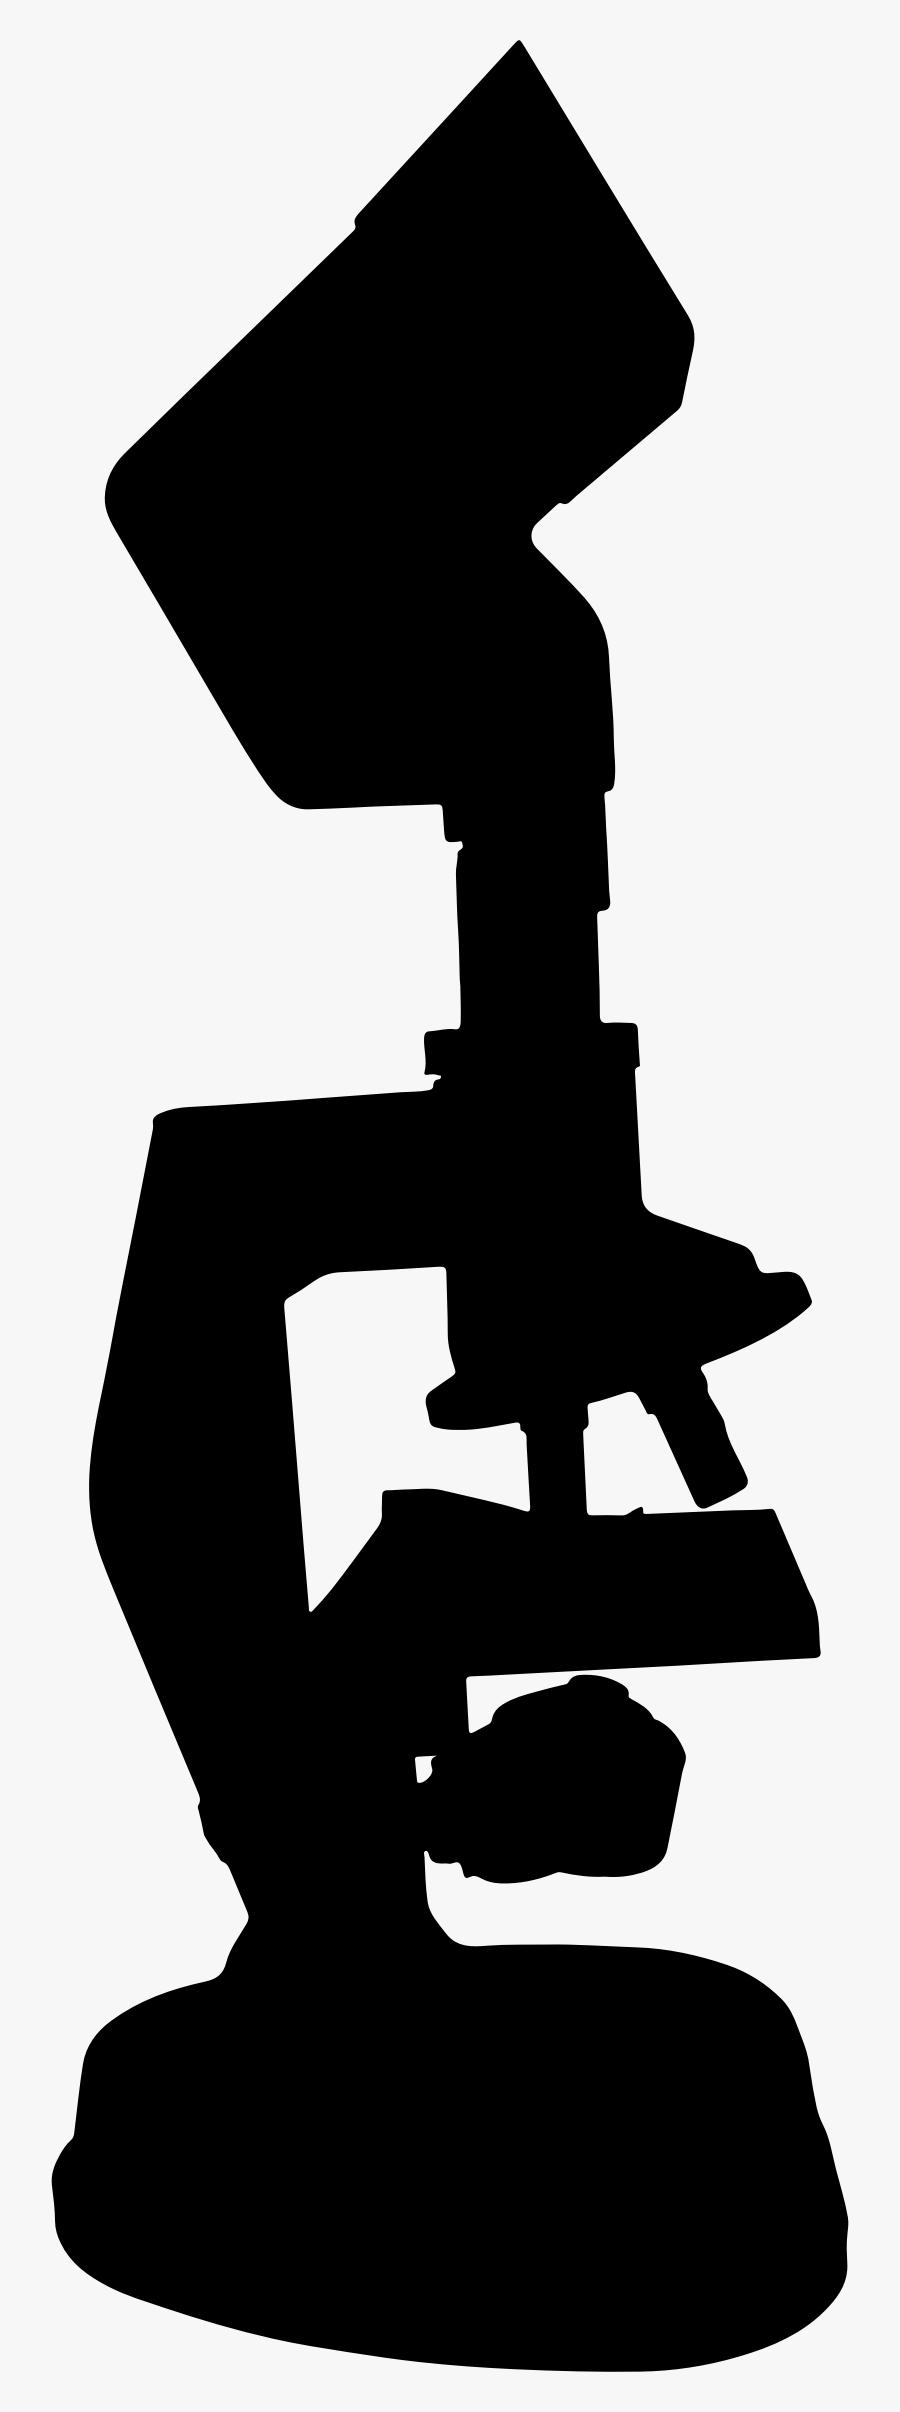 Microscope Silhouette - Silhouette Microscope, Transparent Clipart